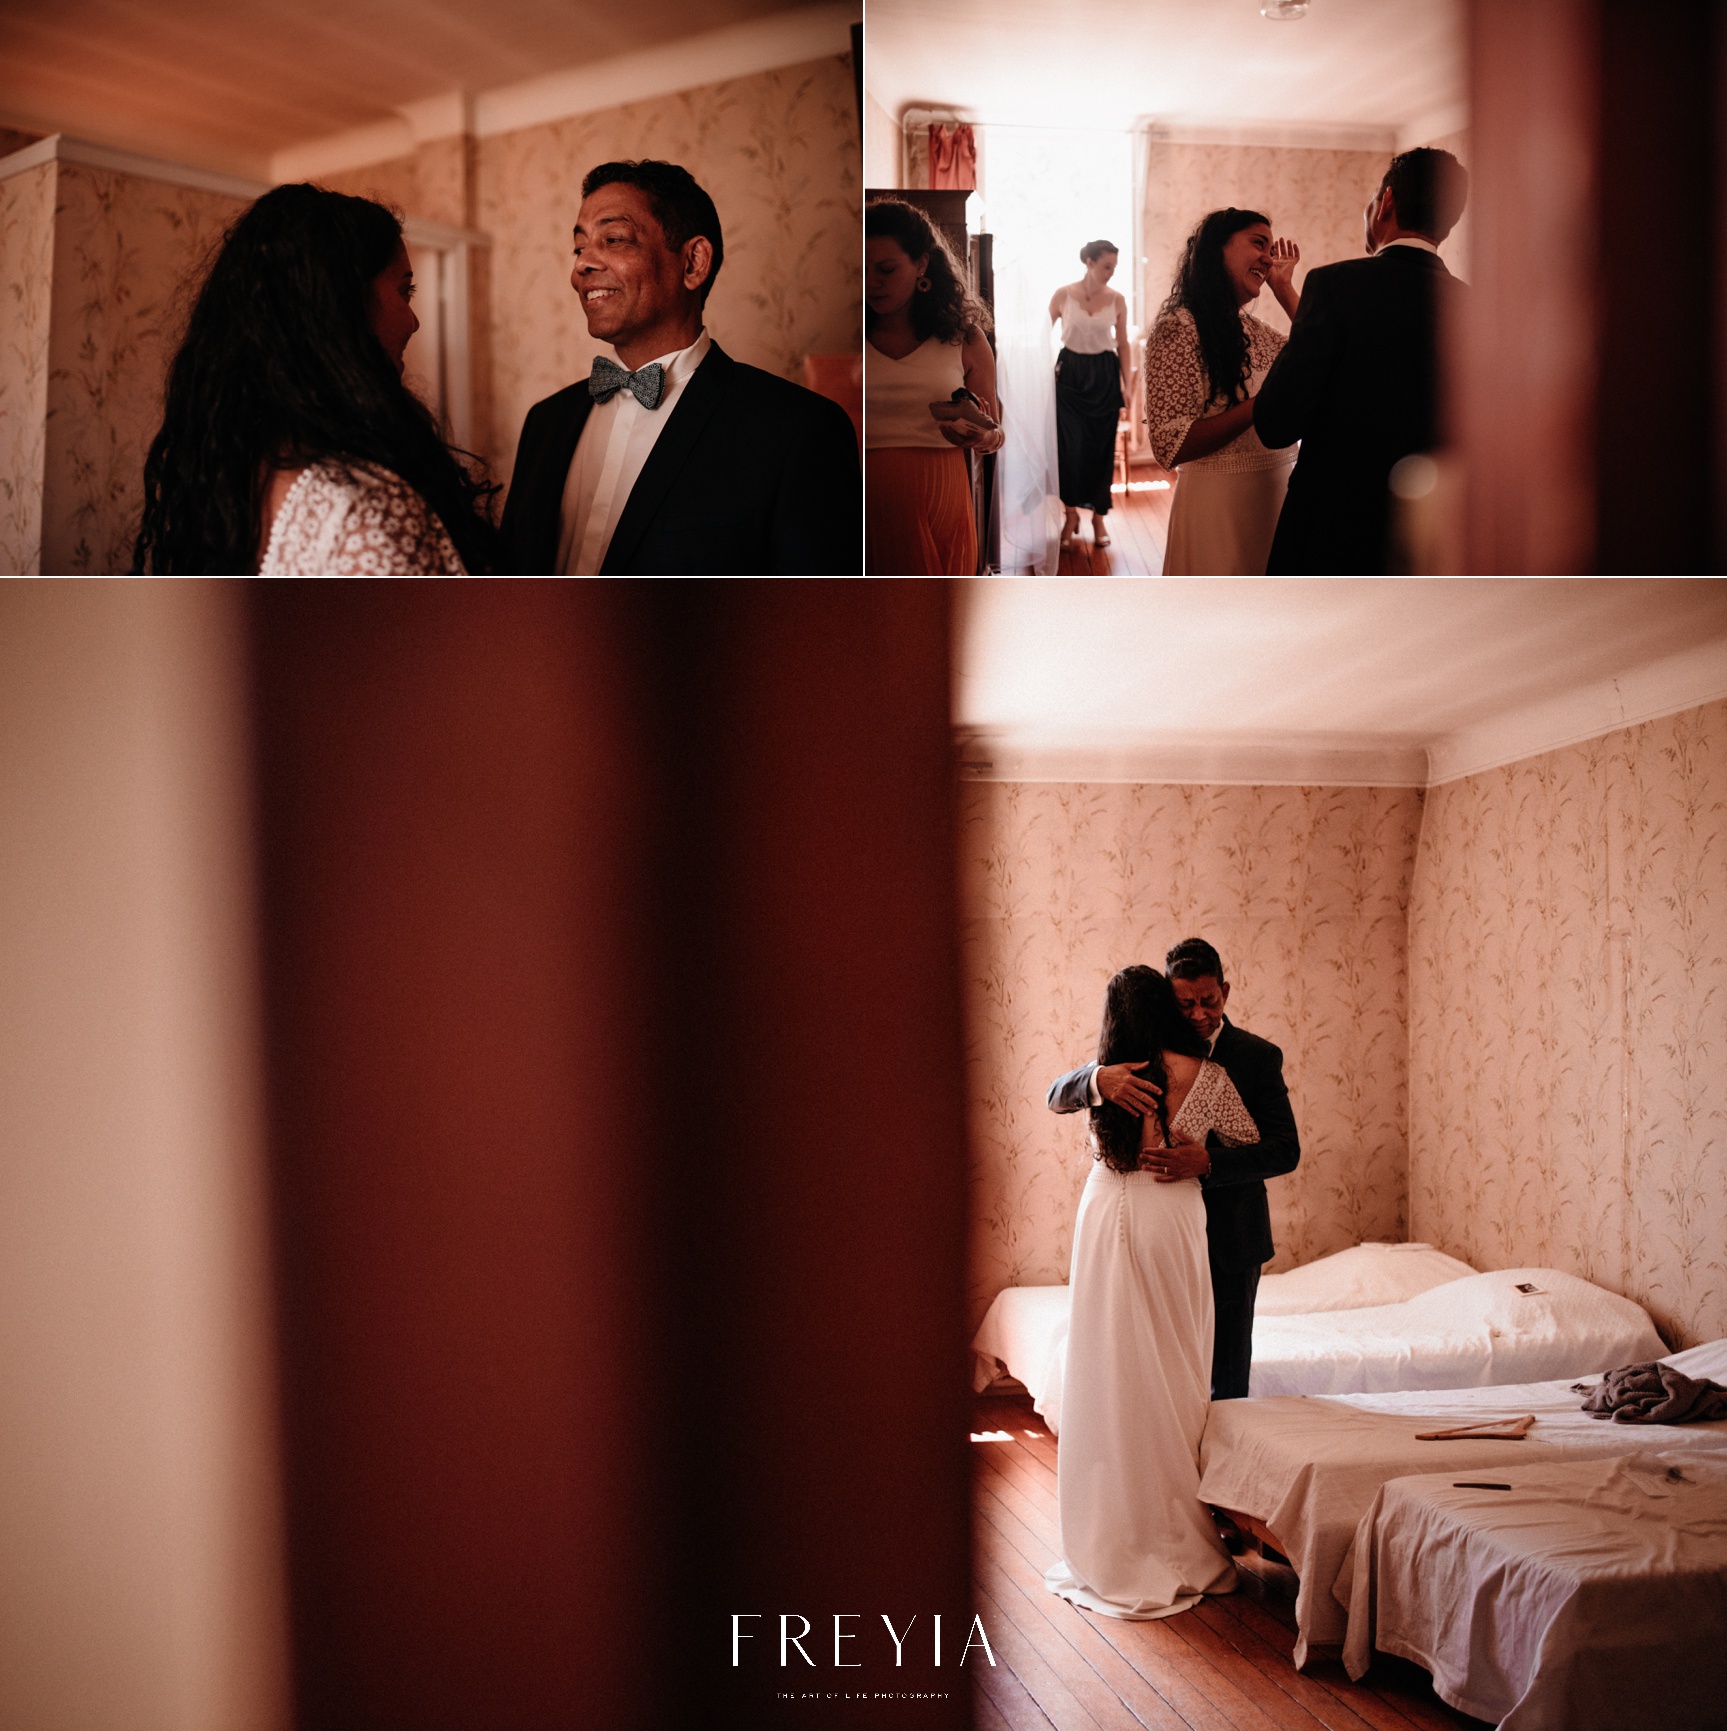 R + T |  mariage reportage alternatif moody intime minimaliste vintage naturel boho boheme |  PHOTOGRAPHE mariage PARIS france destination  | FREYIA photography_-90.jpg (Copy)